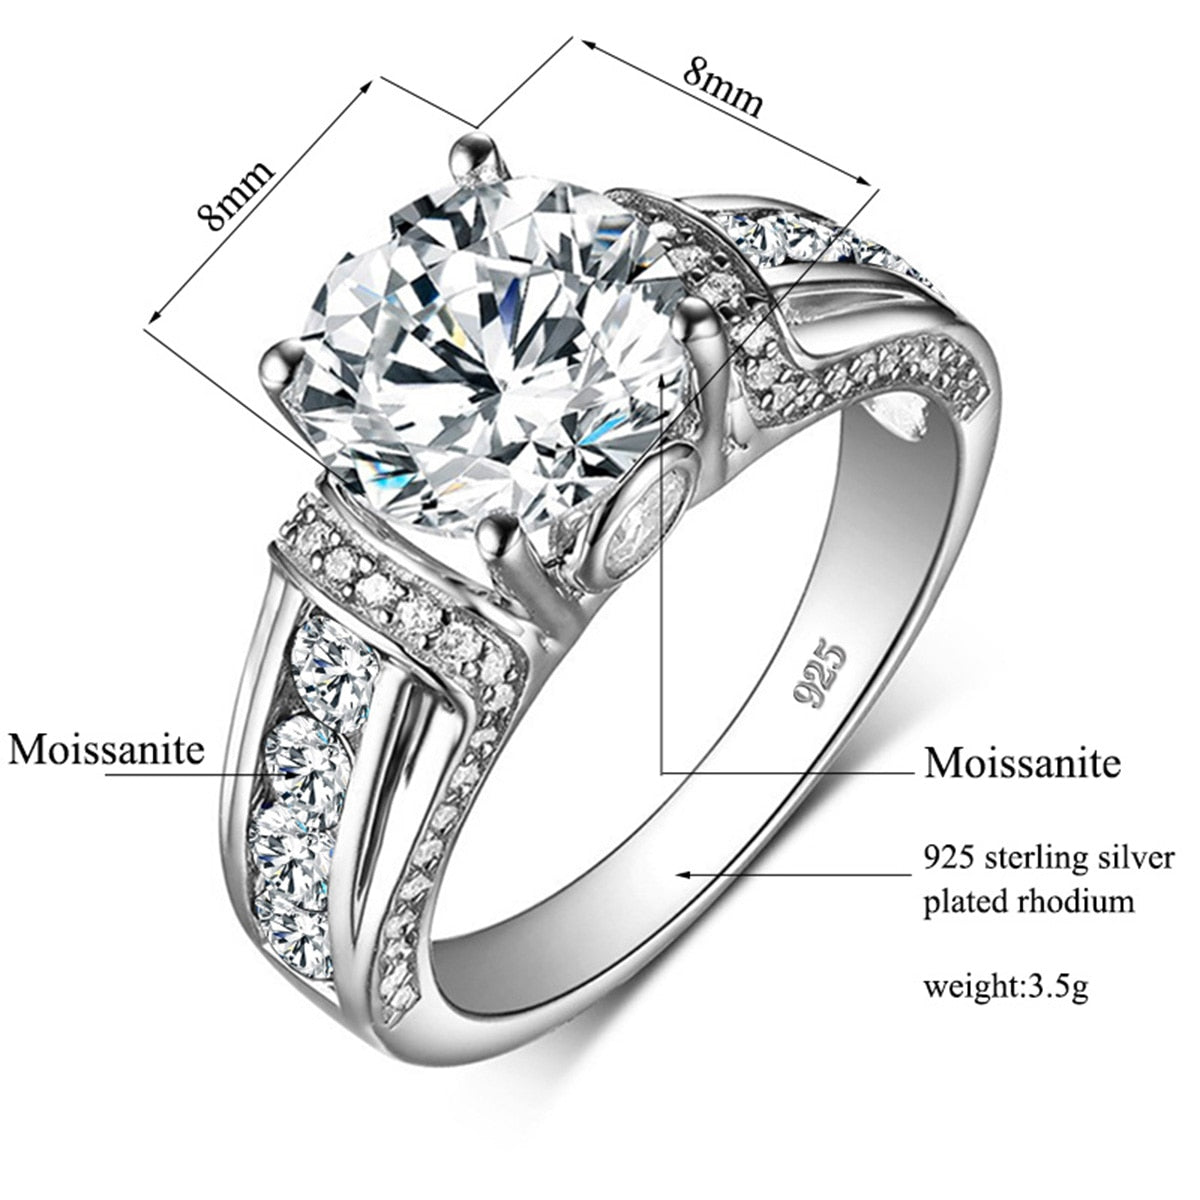 Moissanite rings 2 carat